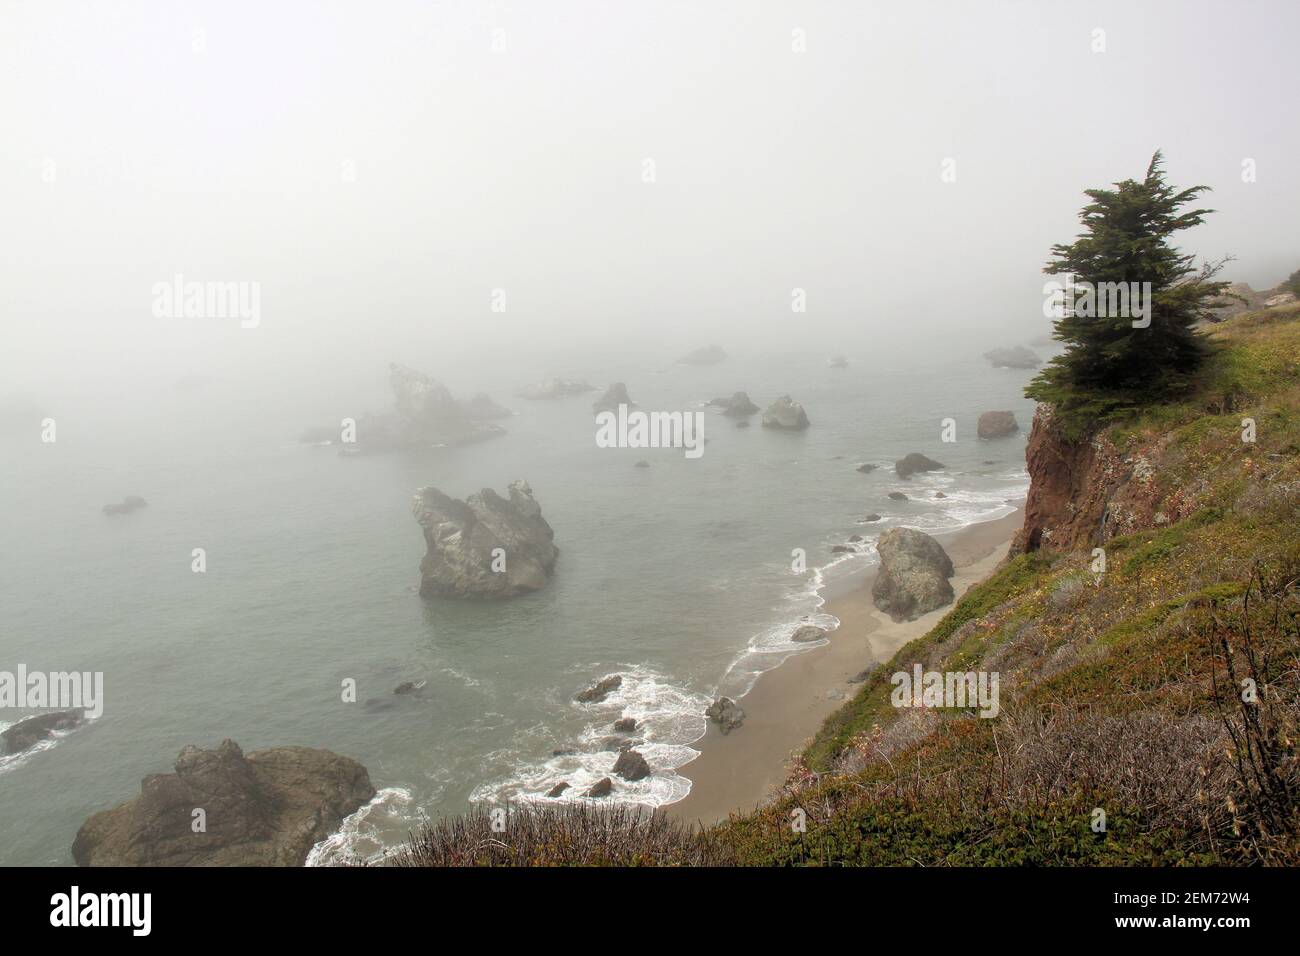 A foggy day along the Northern Coast of California, U.S.A.. Stock Photo